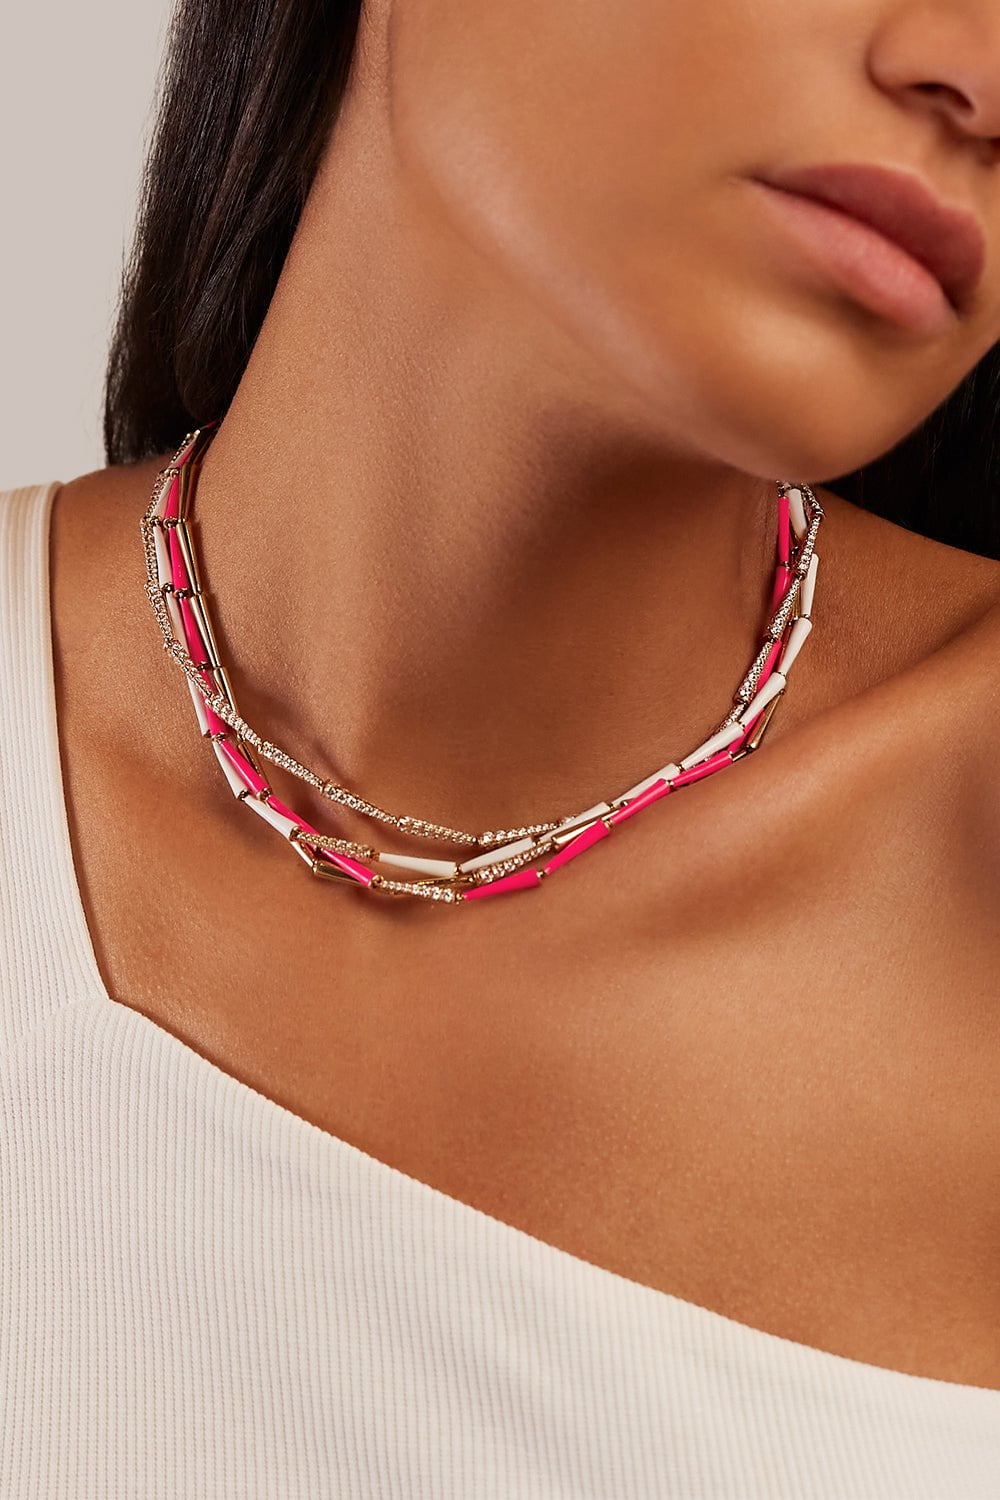 MELISSA KAYE-Neon Pink Lola Linked Necklace-ROSE GOLD